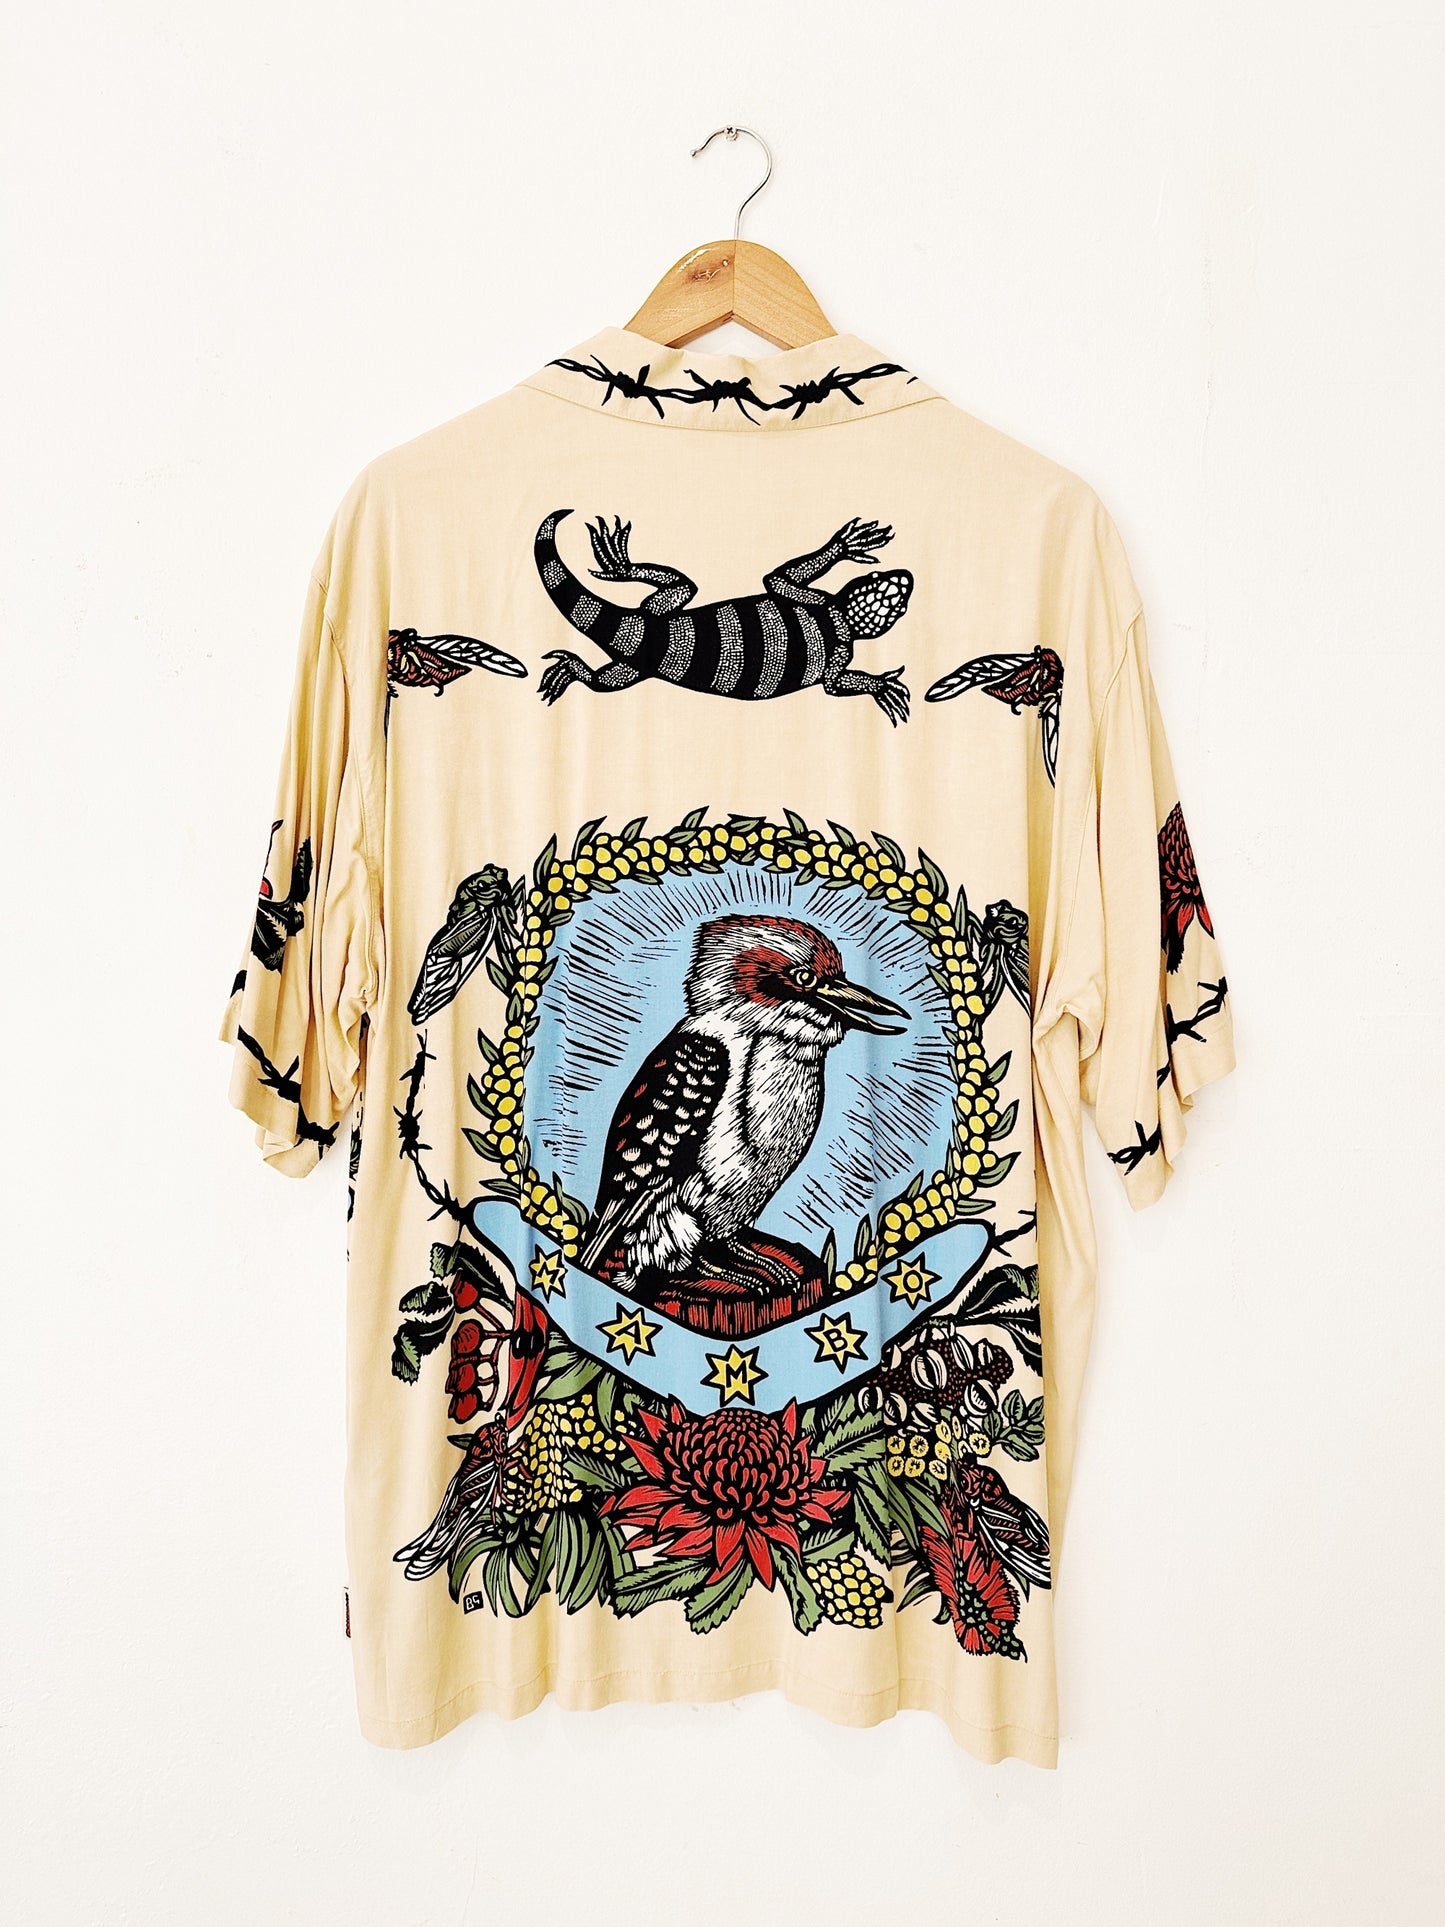 Bruce Goold "Kookaburra" Vintage Mambo Loud Shirt 8